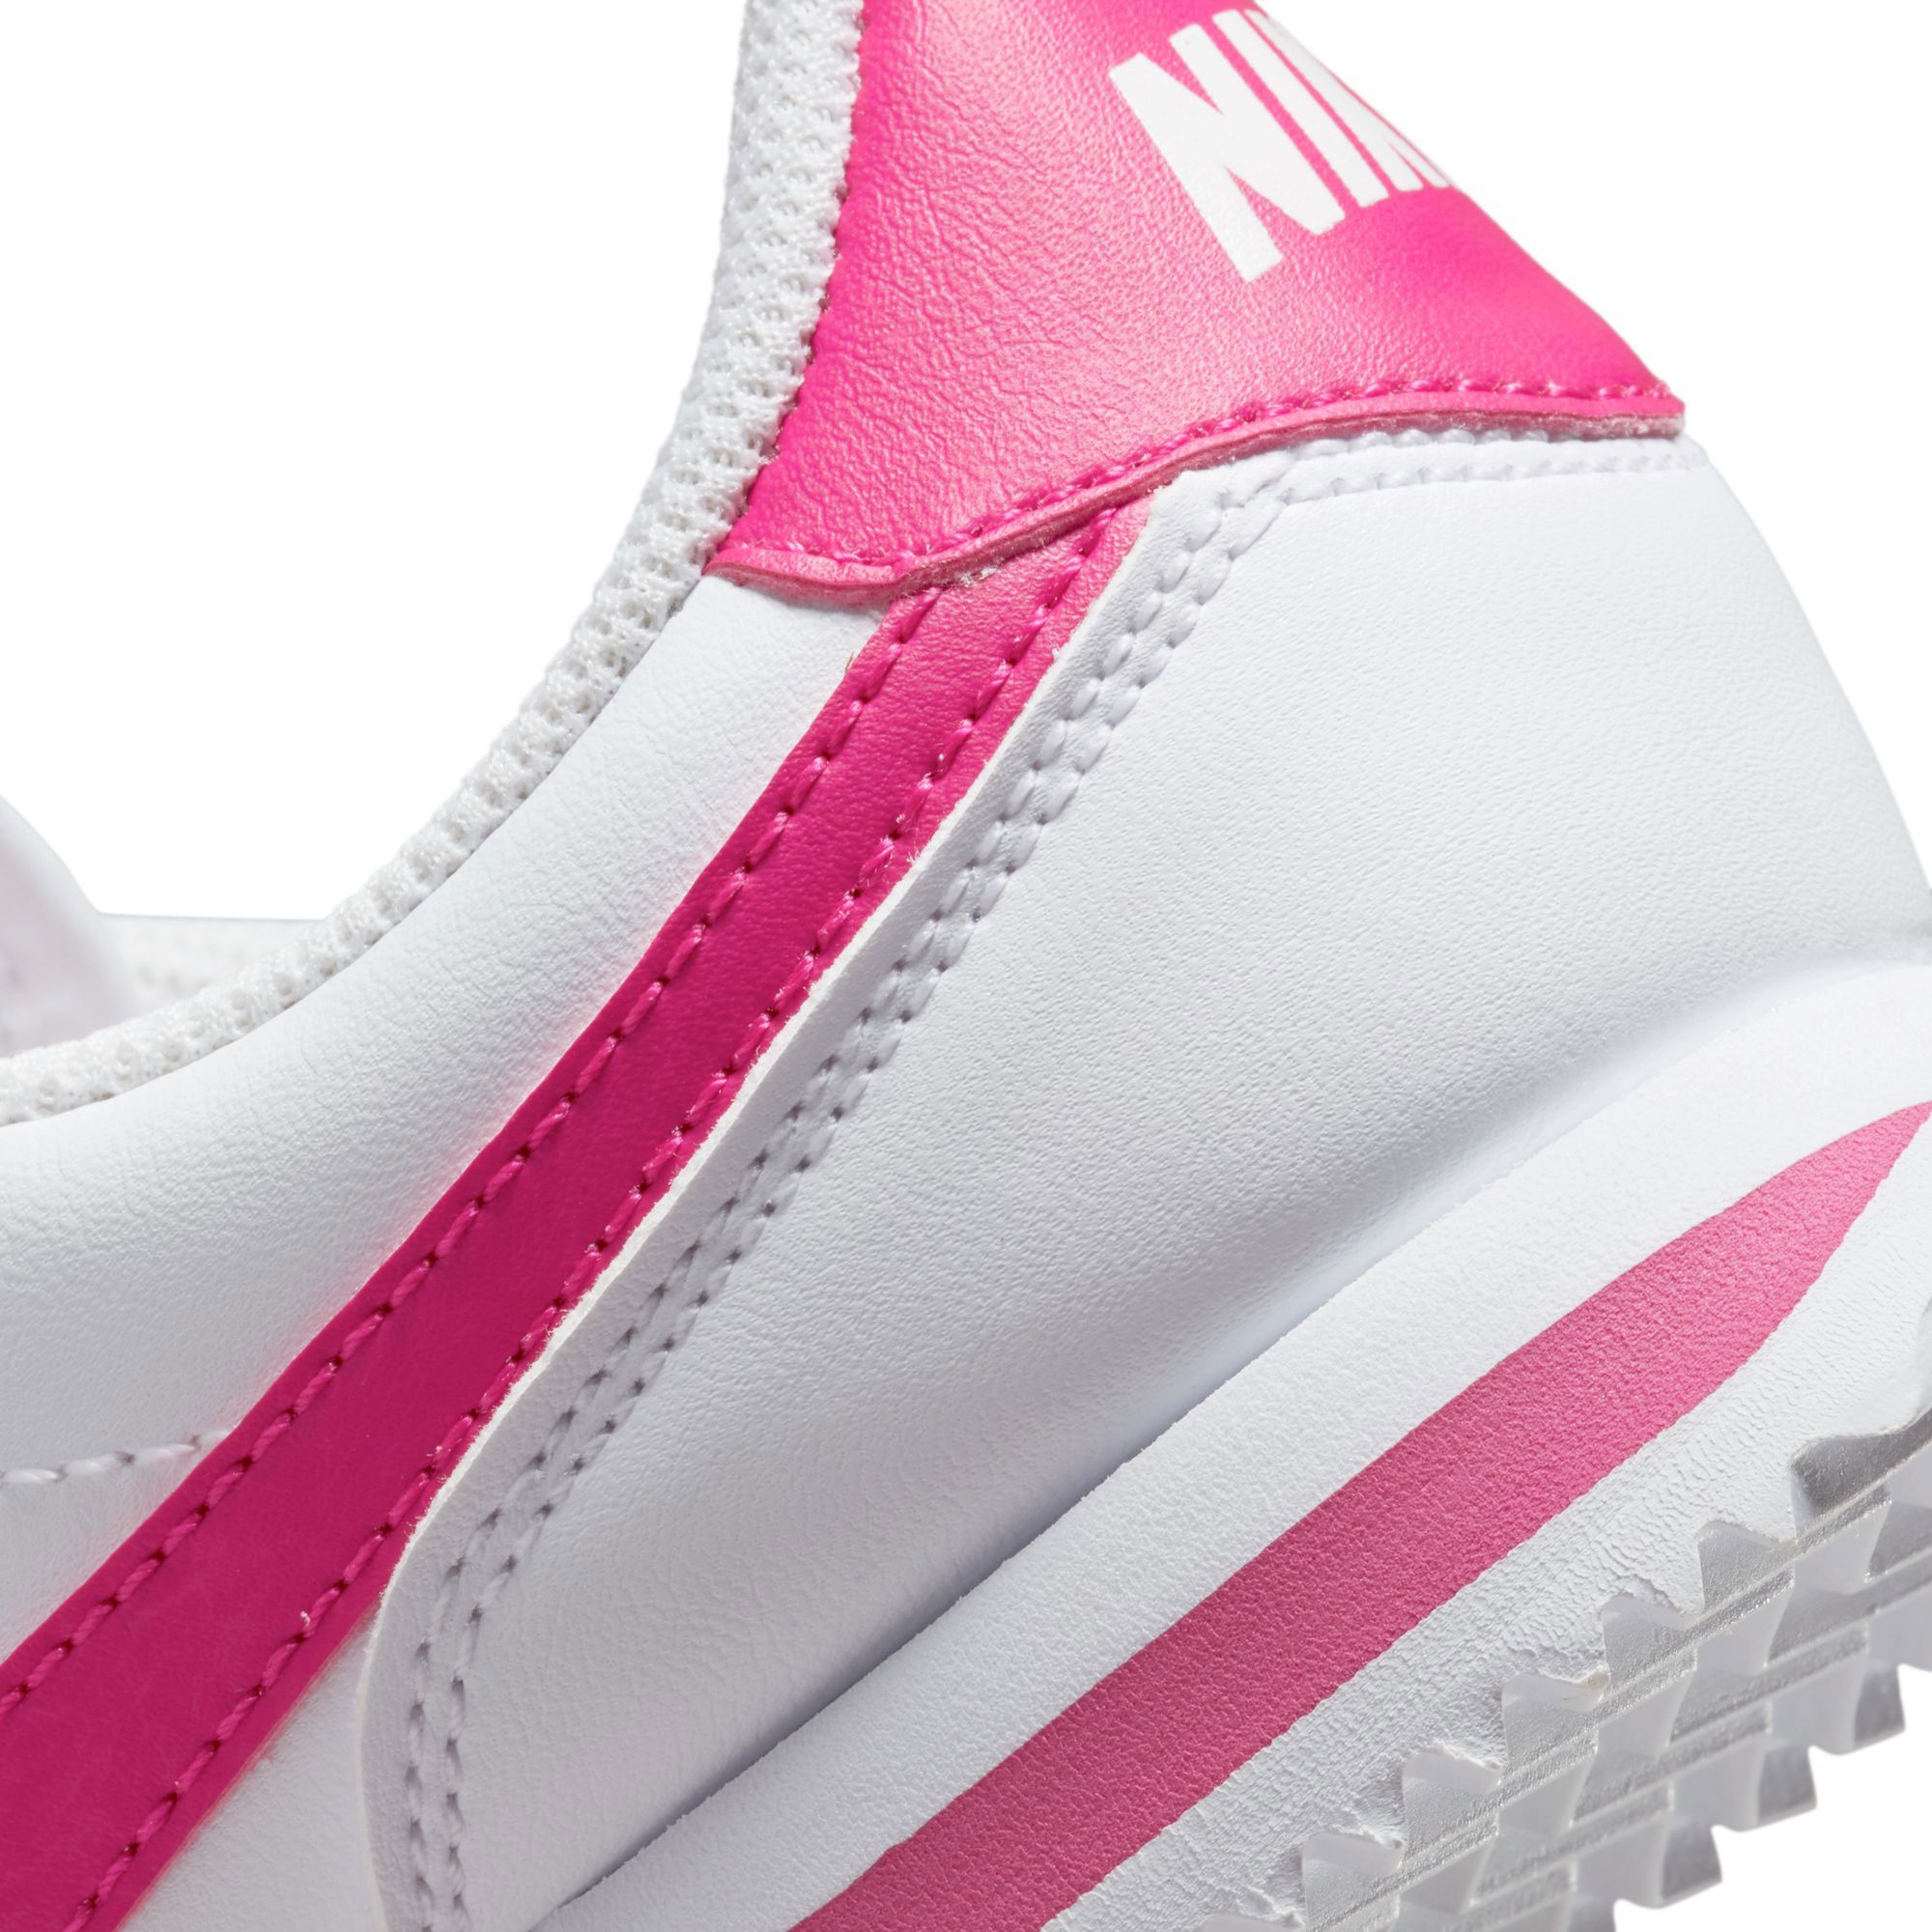 Cortez Basic SL 'White/Pink Prime' (GS) The Nike Cortez was the